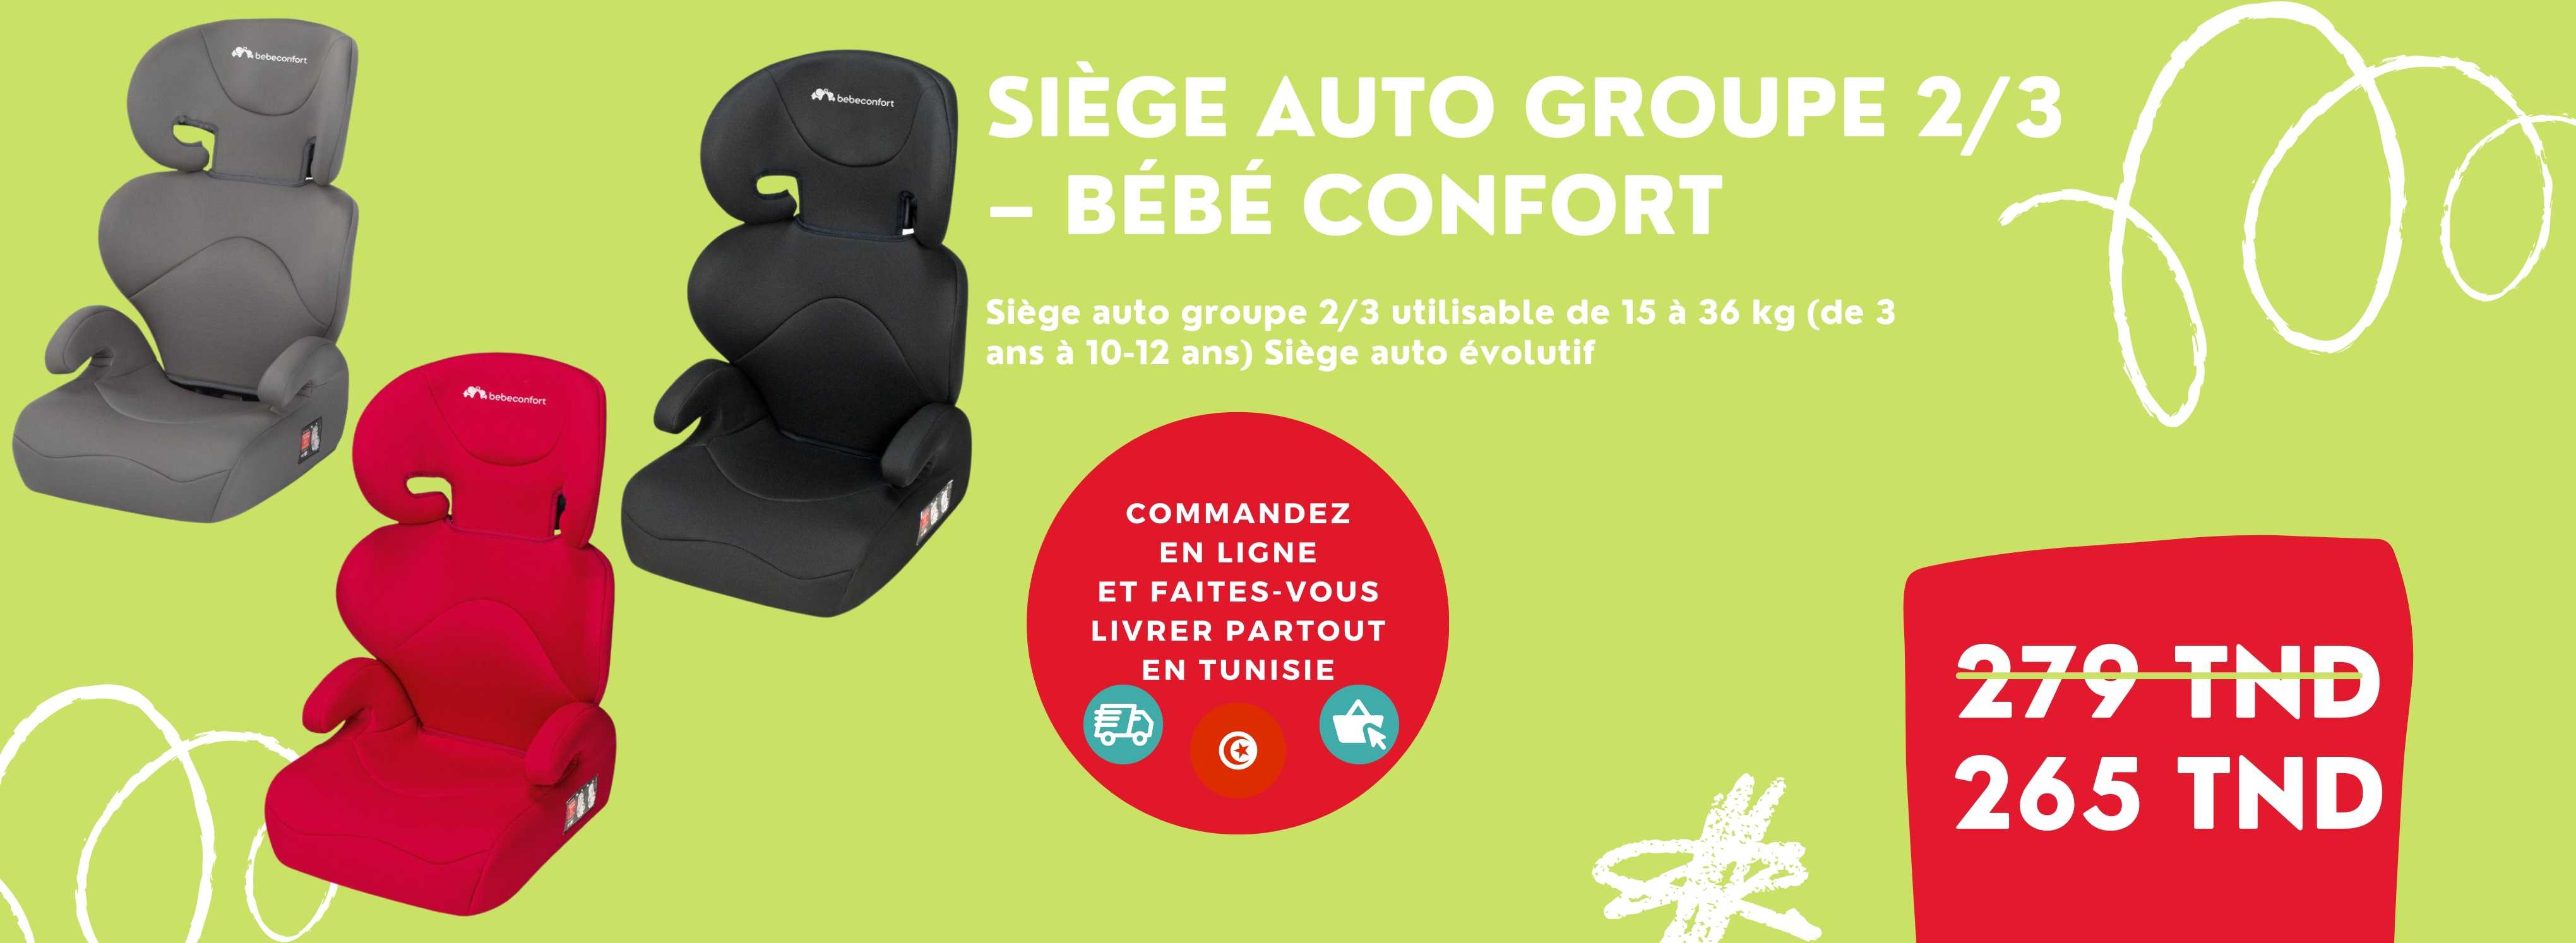 Siège Auto Groupe 23 – Bébé Confort